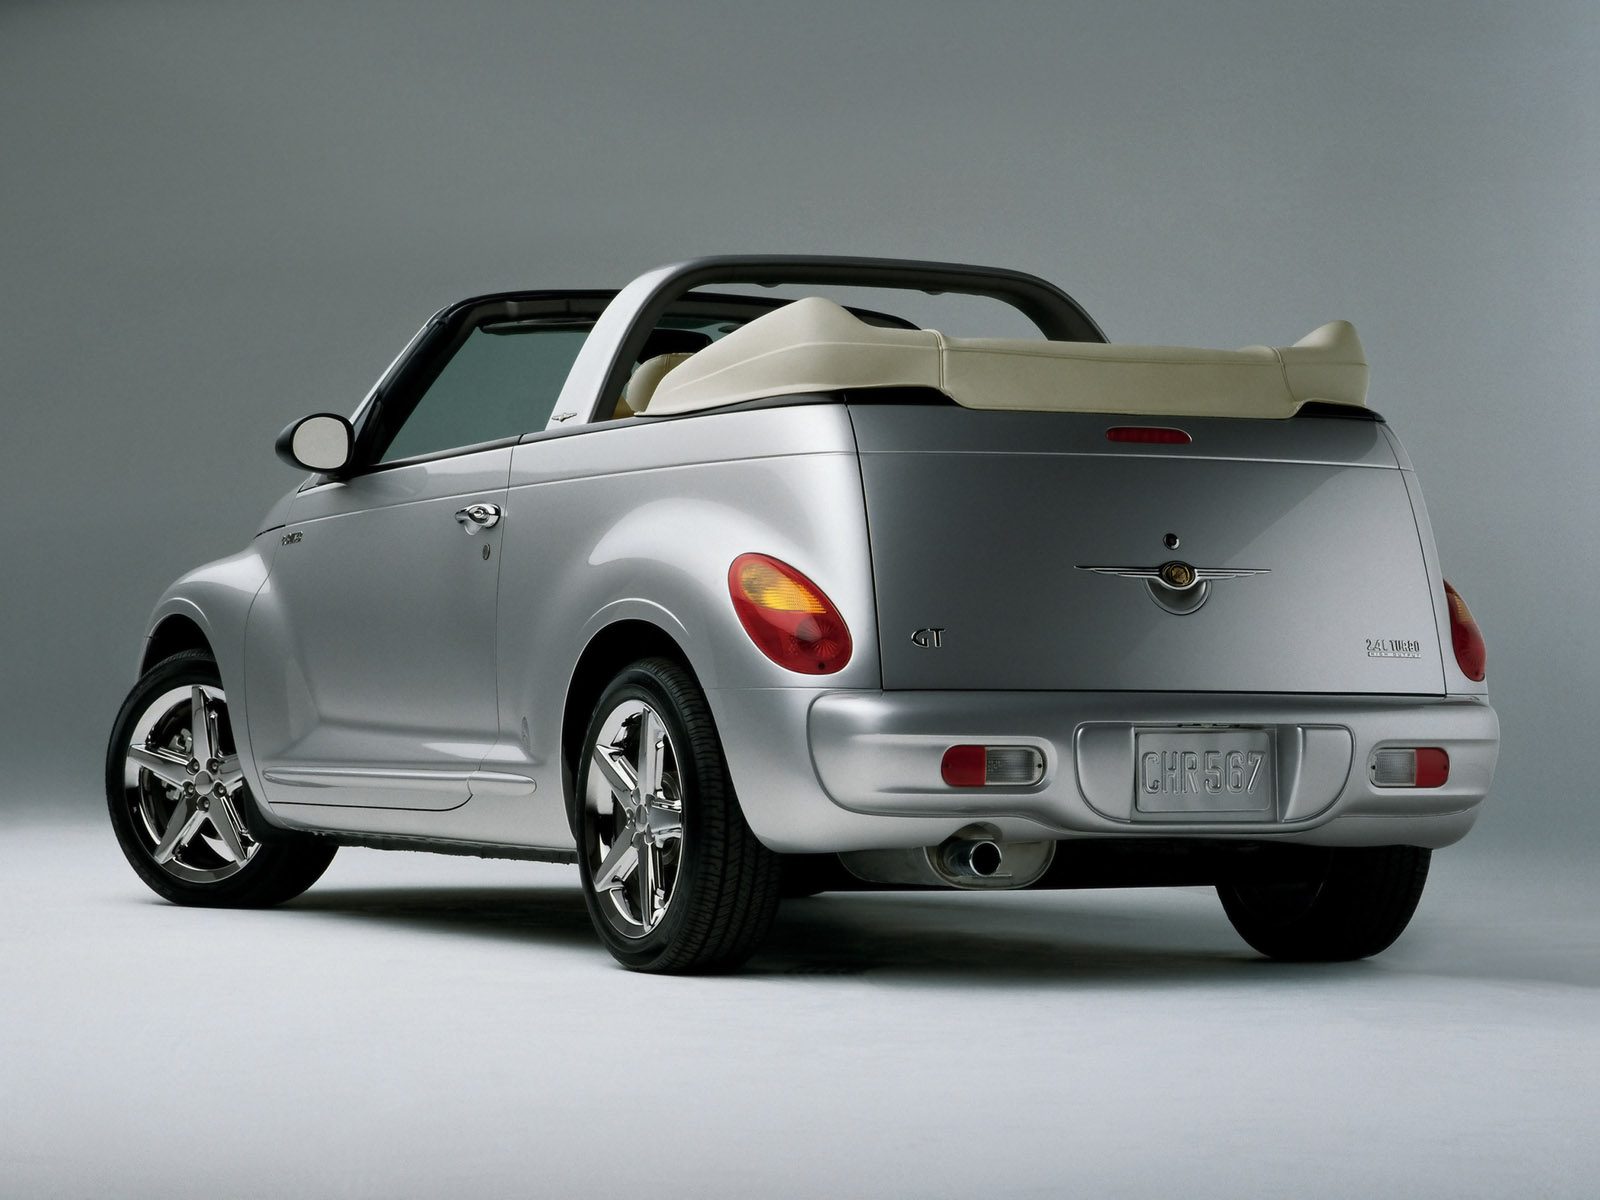 2005-Chrysler-PT-Cruiser-Convertible-ra-1600x1200.jpg